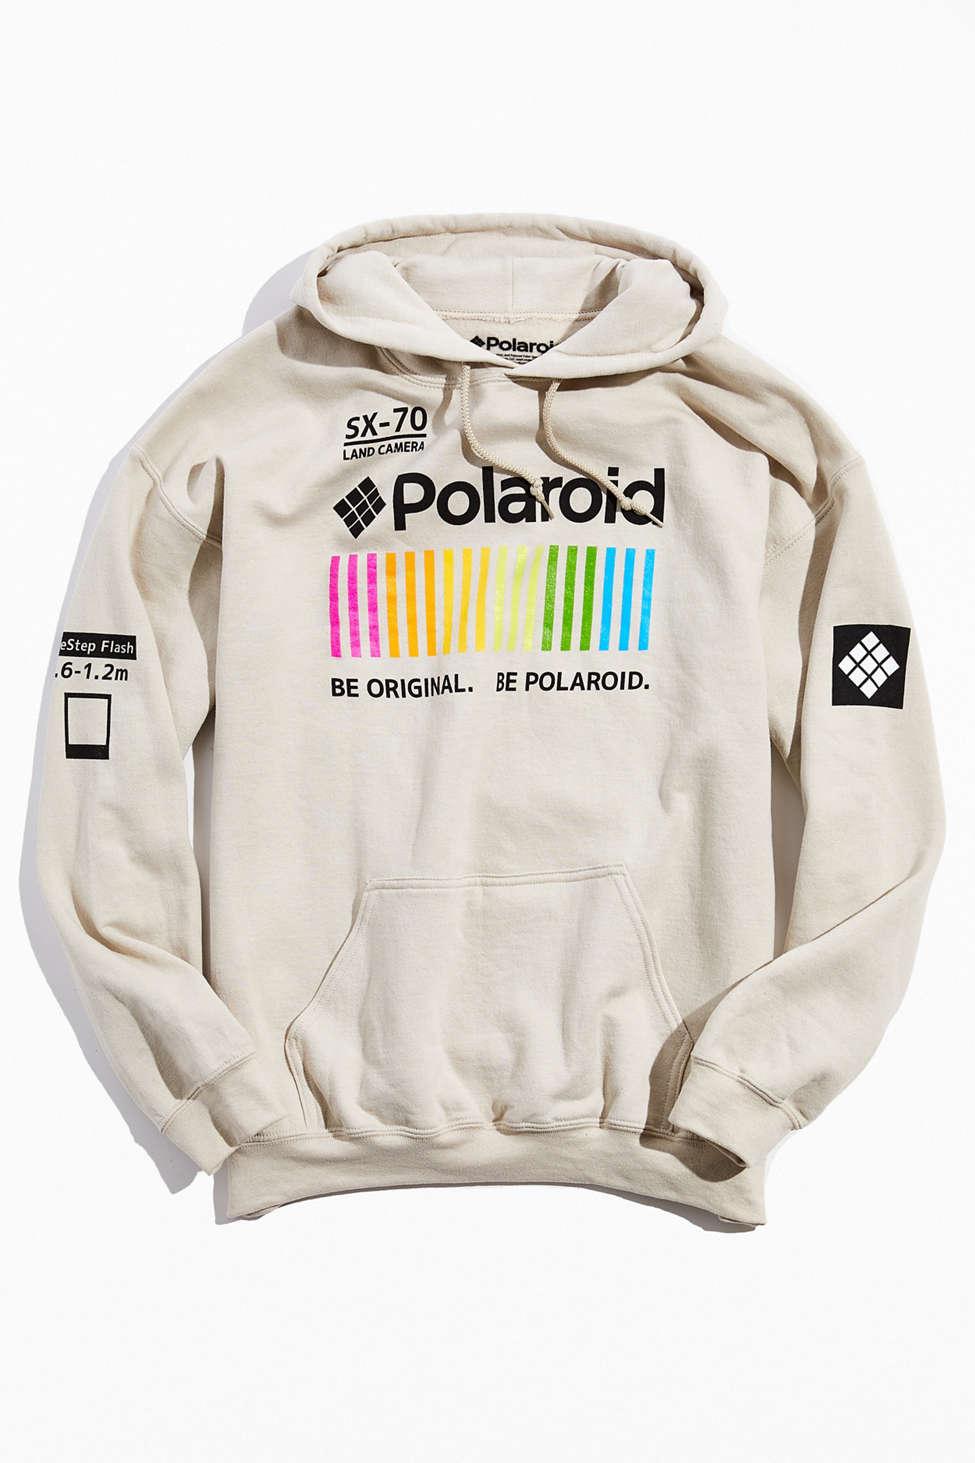 Urban Outfitters Polaroid Hoodie Sweatshirt in Beige (Gray) for Men - Lyst